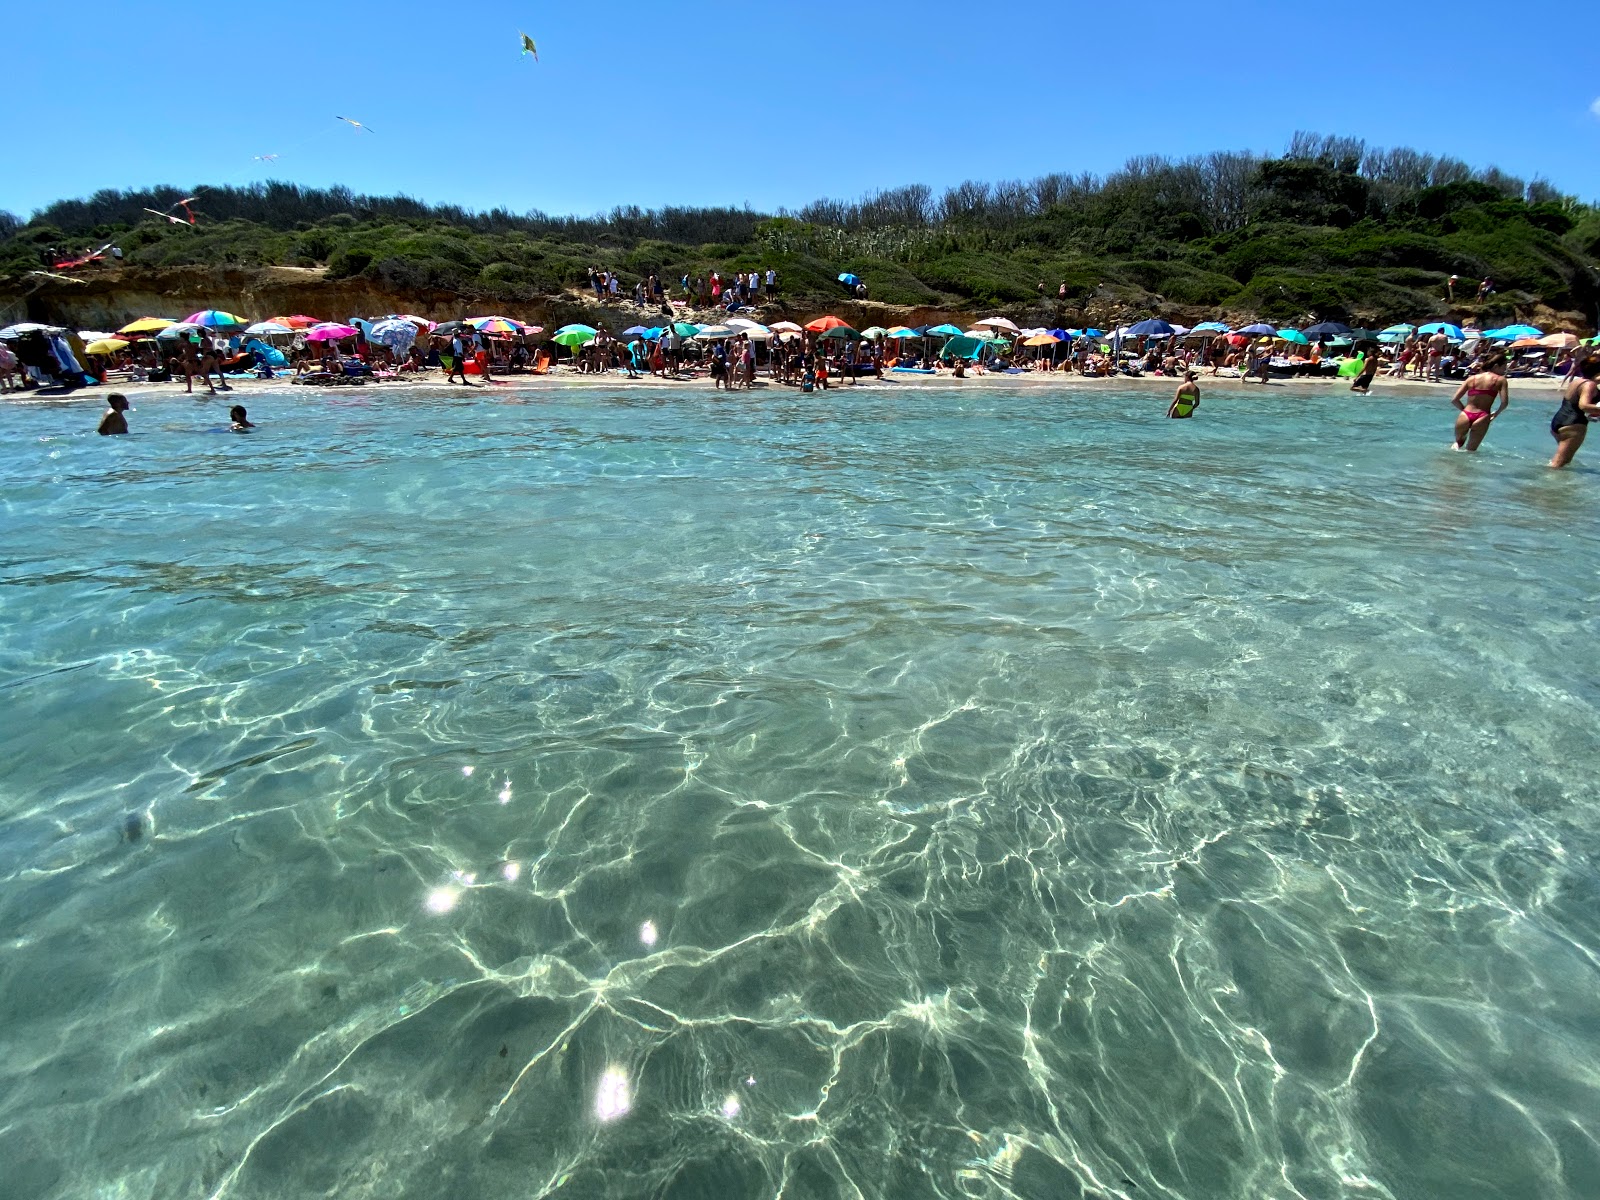 Foto av Spiaggia Baia dei Turchi med rymlig strand